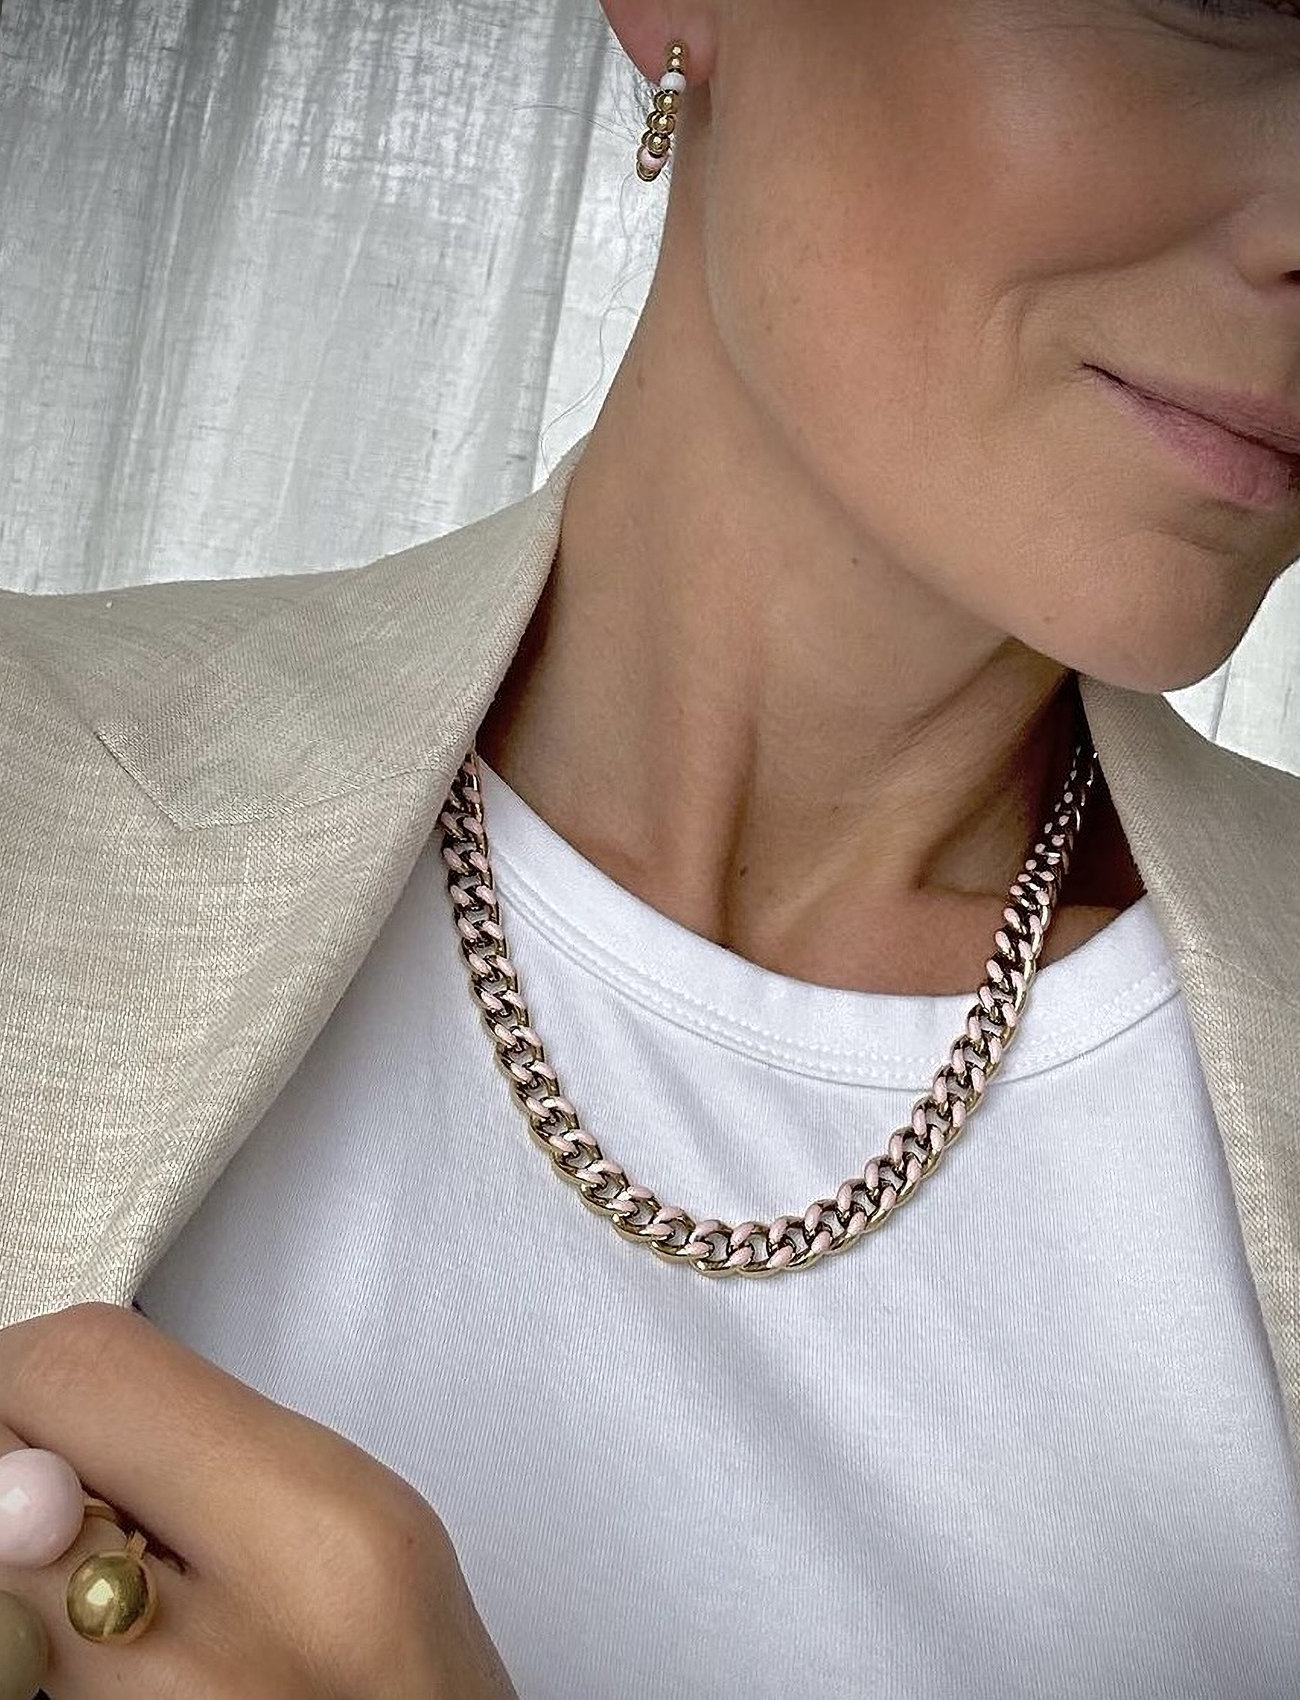 Bud to rose - Riviera Reversible Small Necklace White/gold - feestelijke kleding voor outlet-prijzen - pink - 1